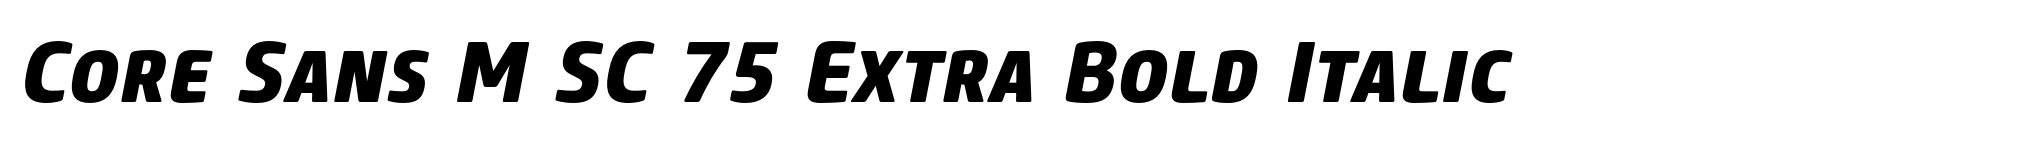 Core Sans M SC 75 Extra Bold Italic image